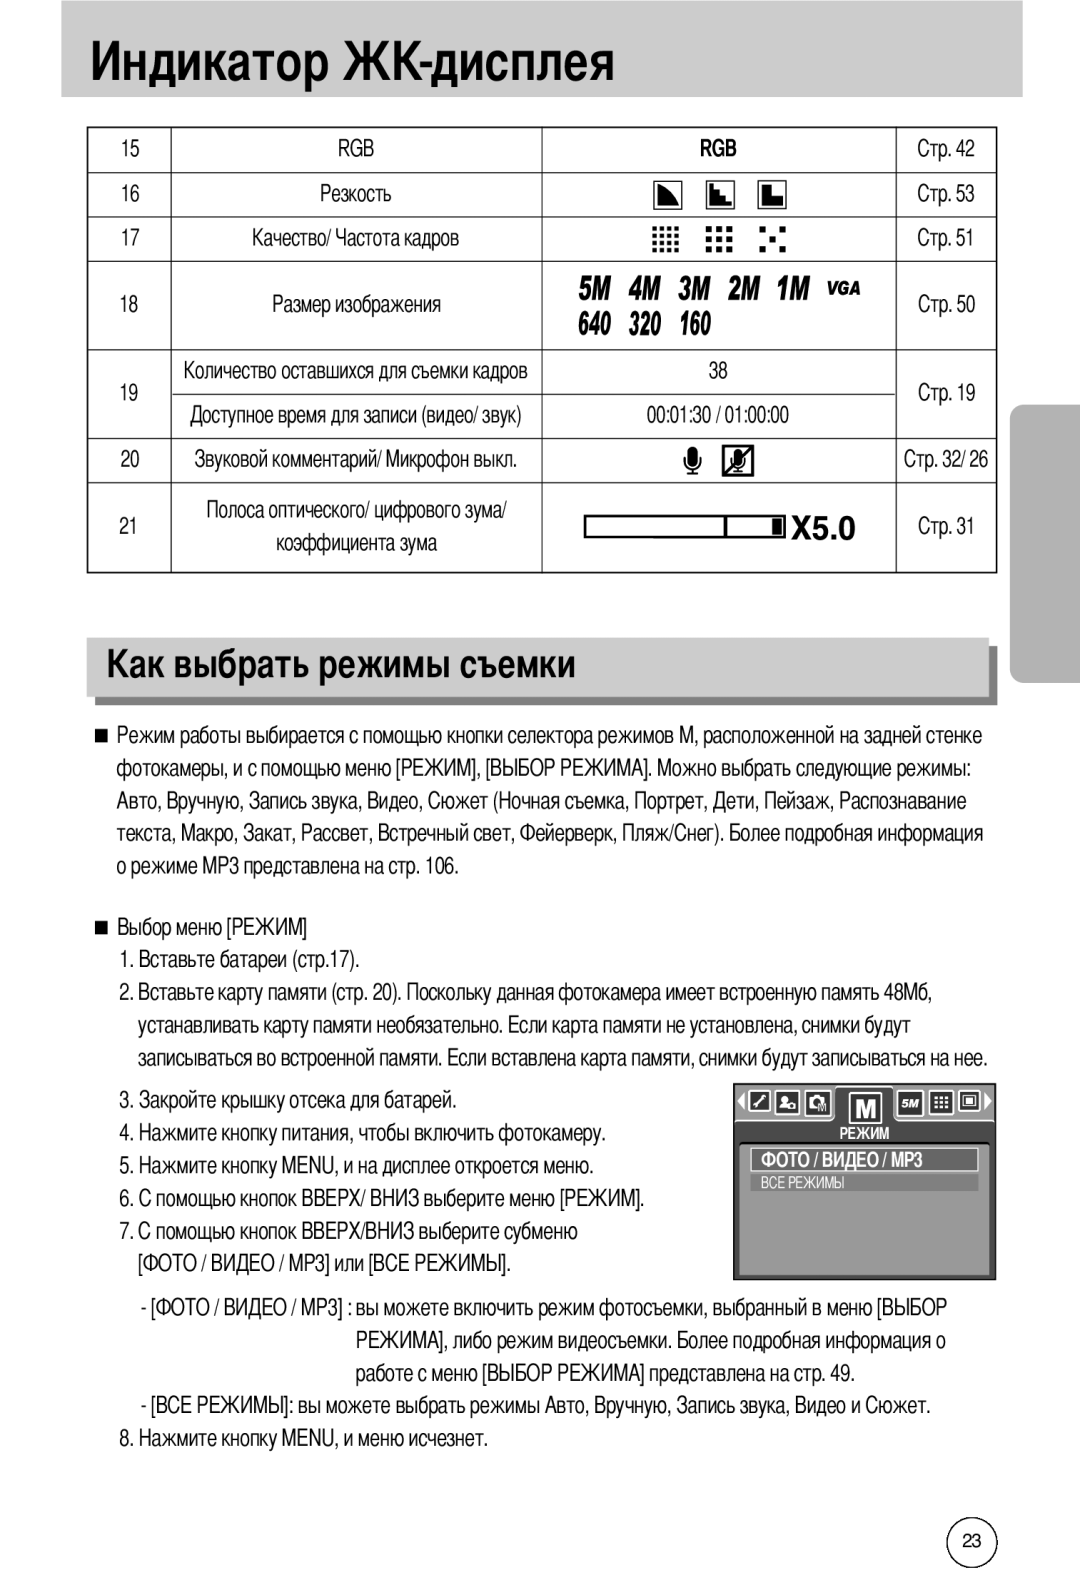 Samsung EC-I50ZZBBA/GB manual 000130, фотокамеры, и с помощью меню Авто, текста, о режиме MP3 представлена на стр, дисплея 